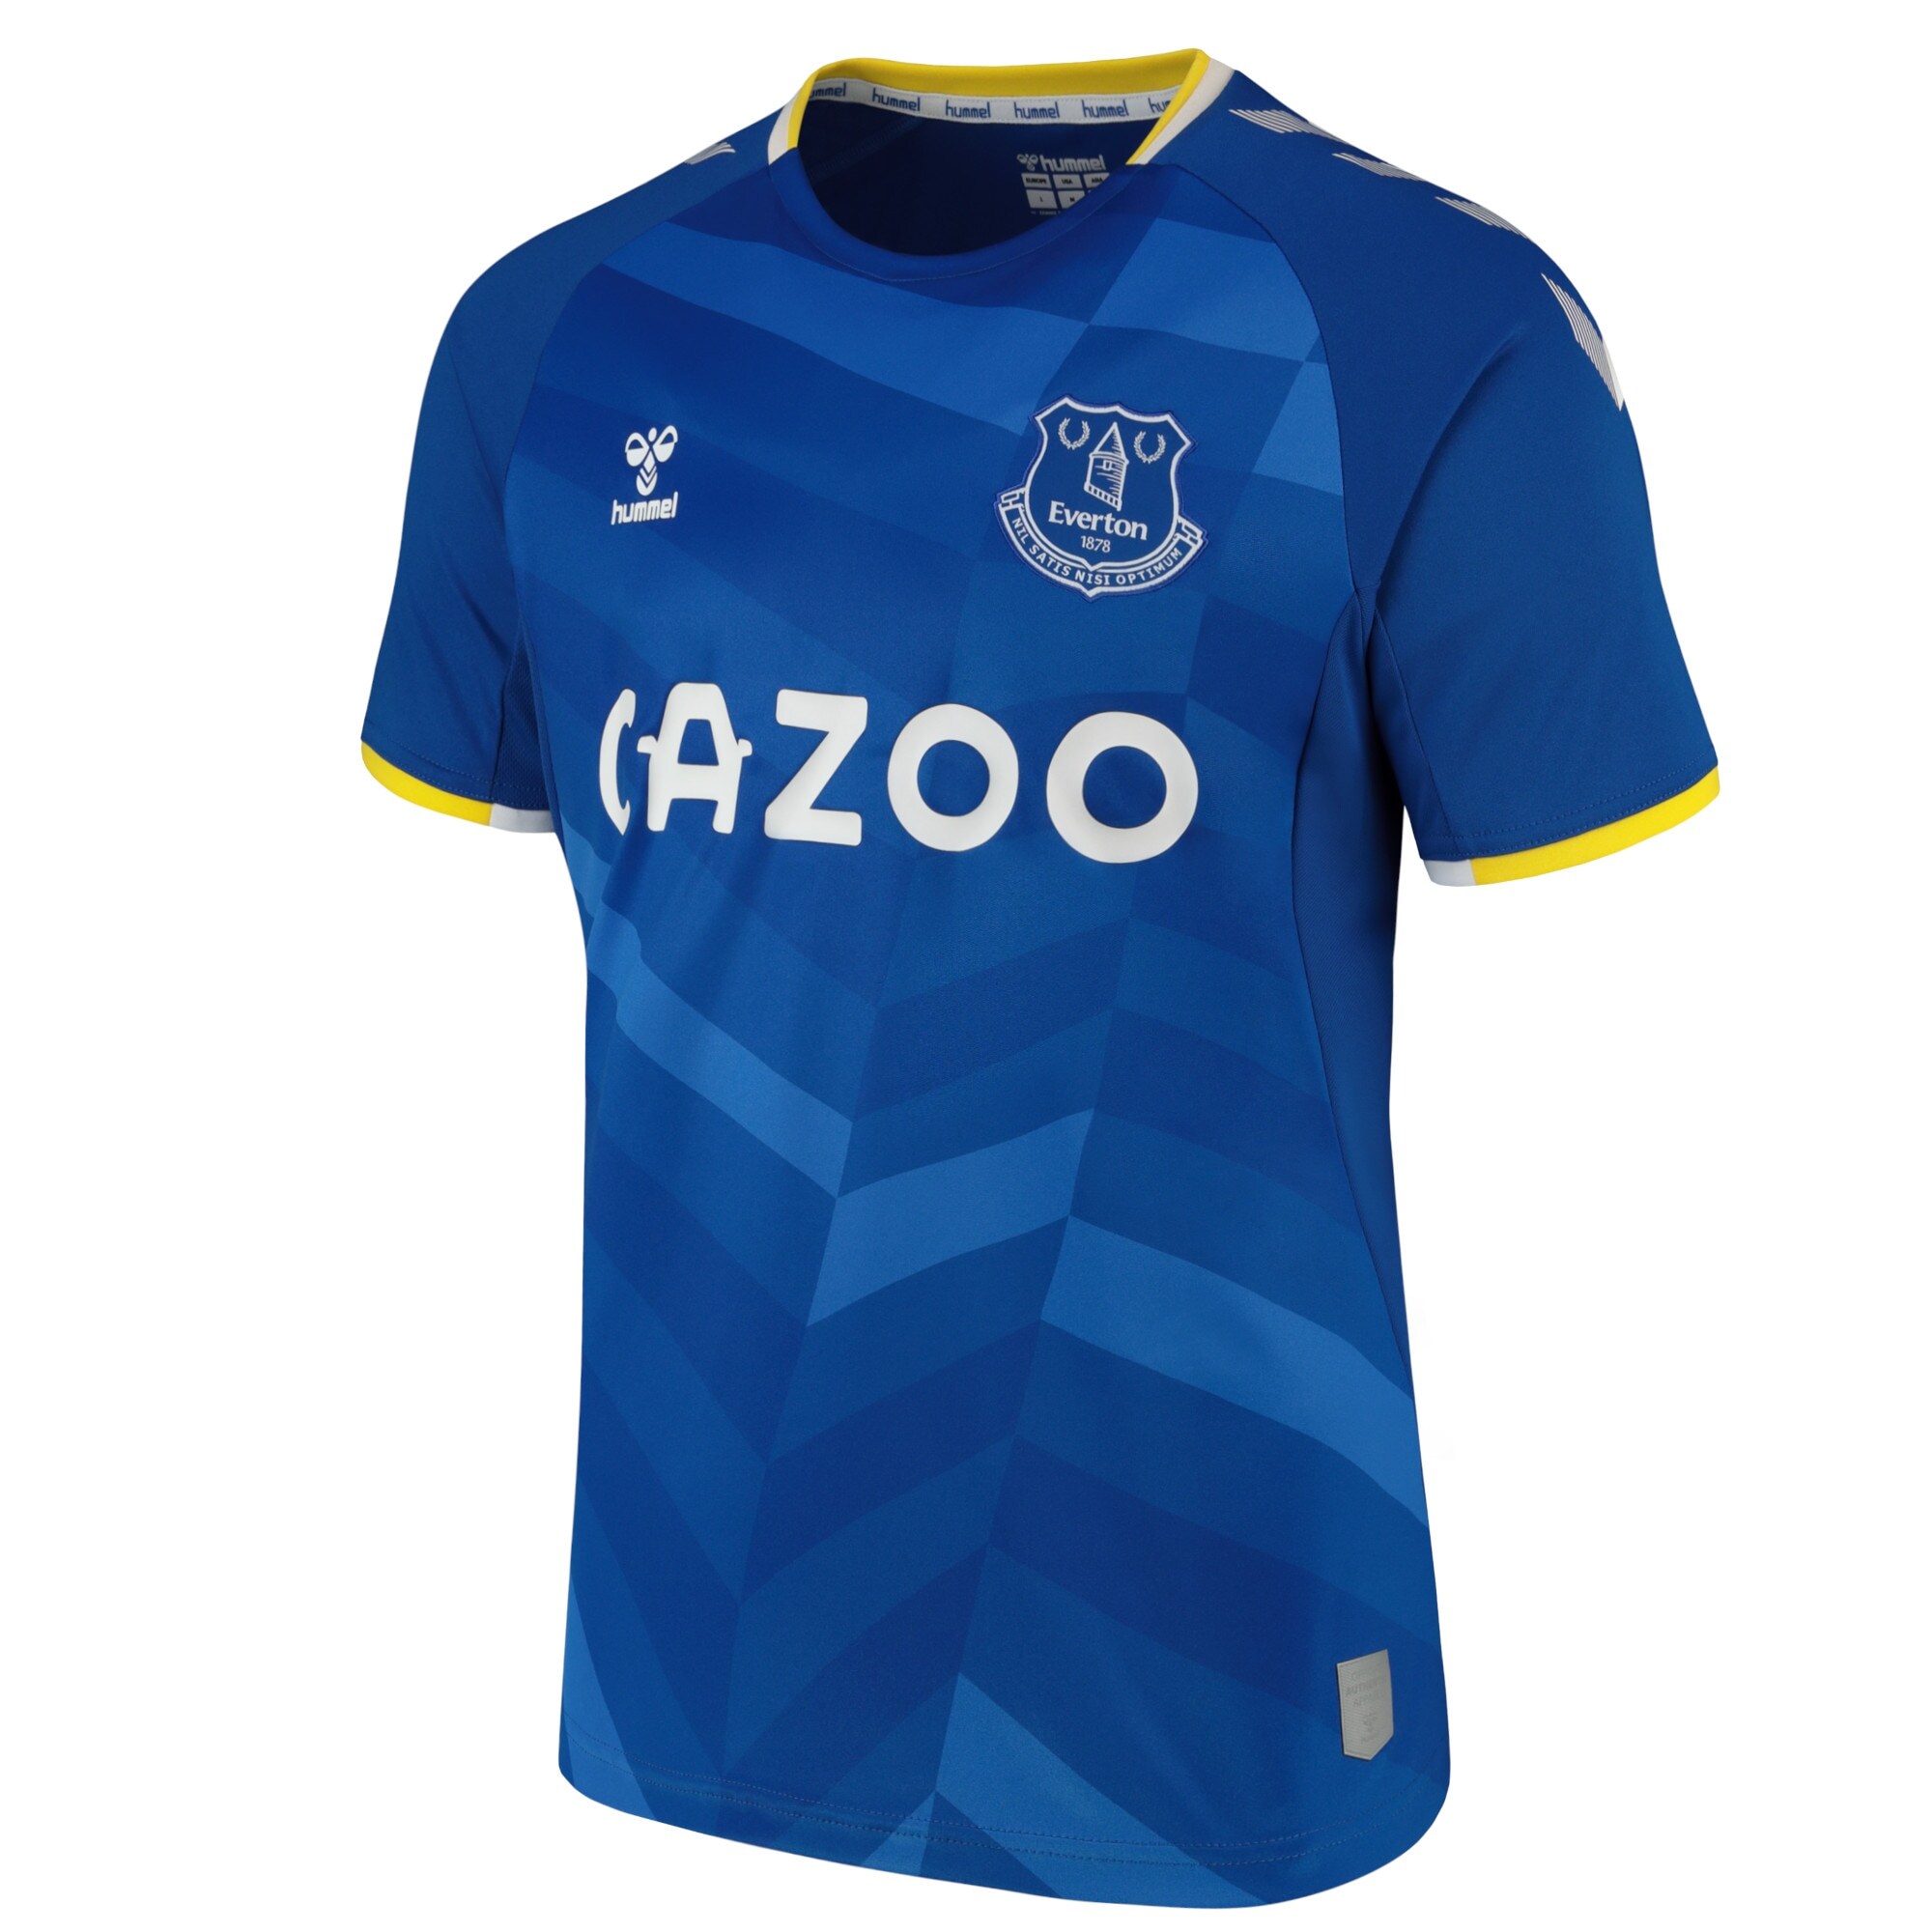 Everton Home Shirt - 2021-22 with El Ghazi 34 printing